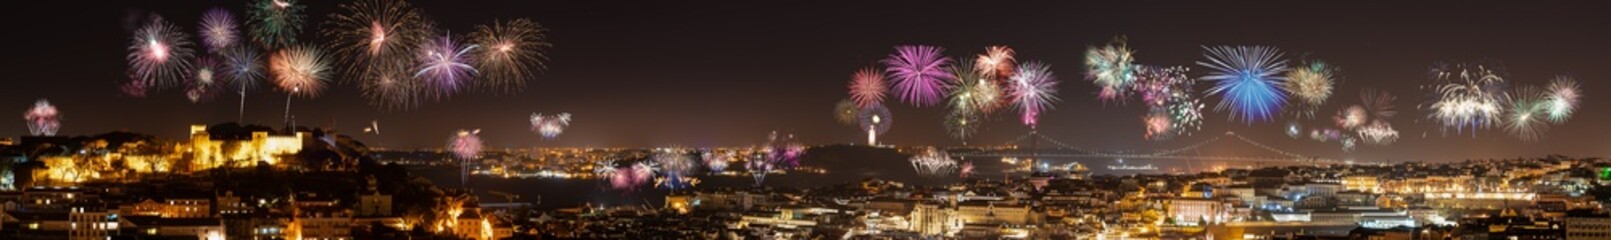 Skyline panorama of Lisbon with firework display. Portugal